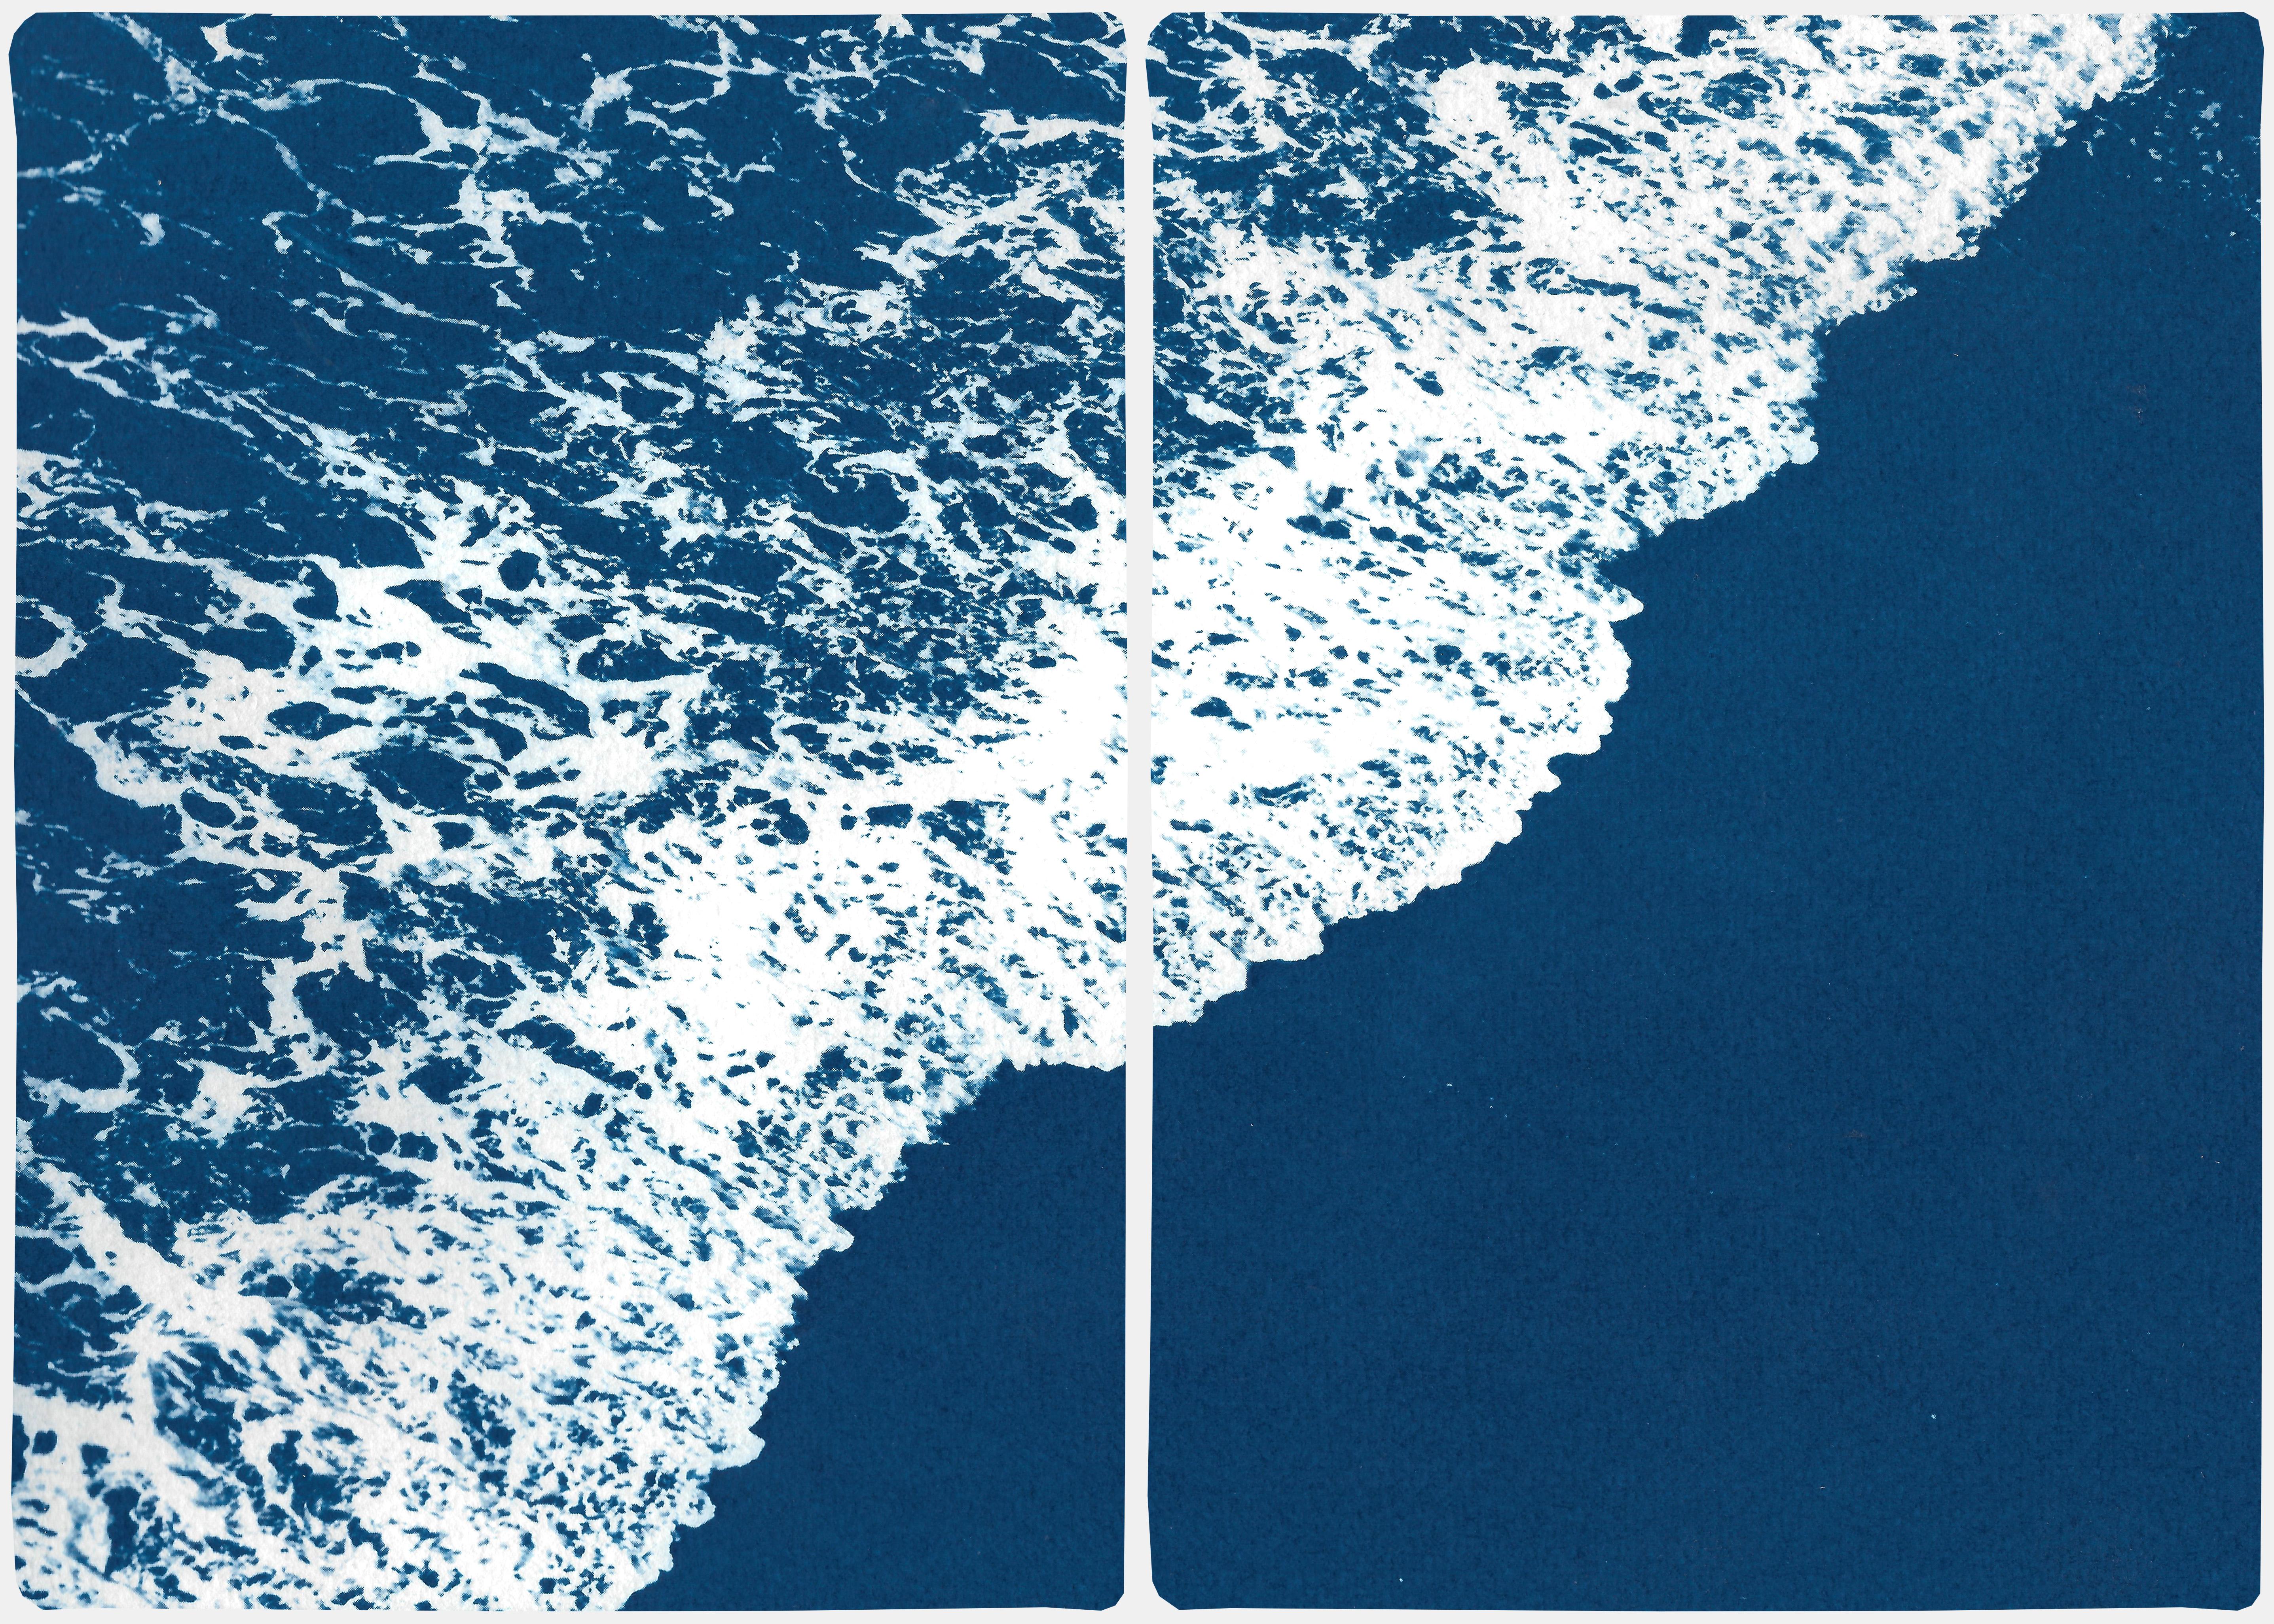 Diptyque nautique de sable bleu profond, cyanotype original, paysage marin envoûtant